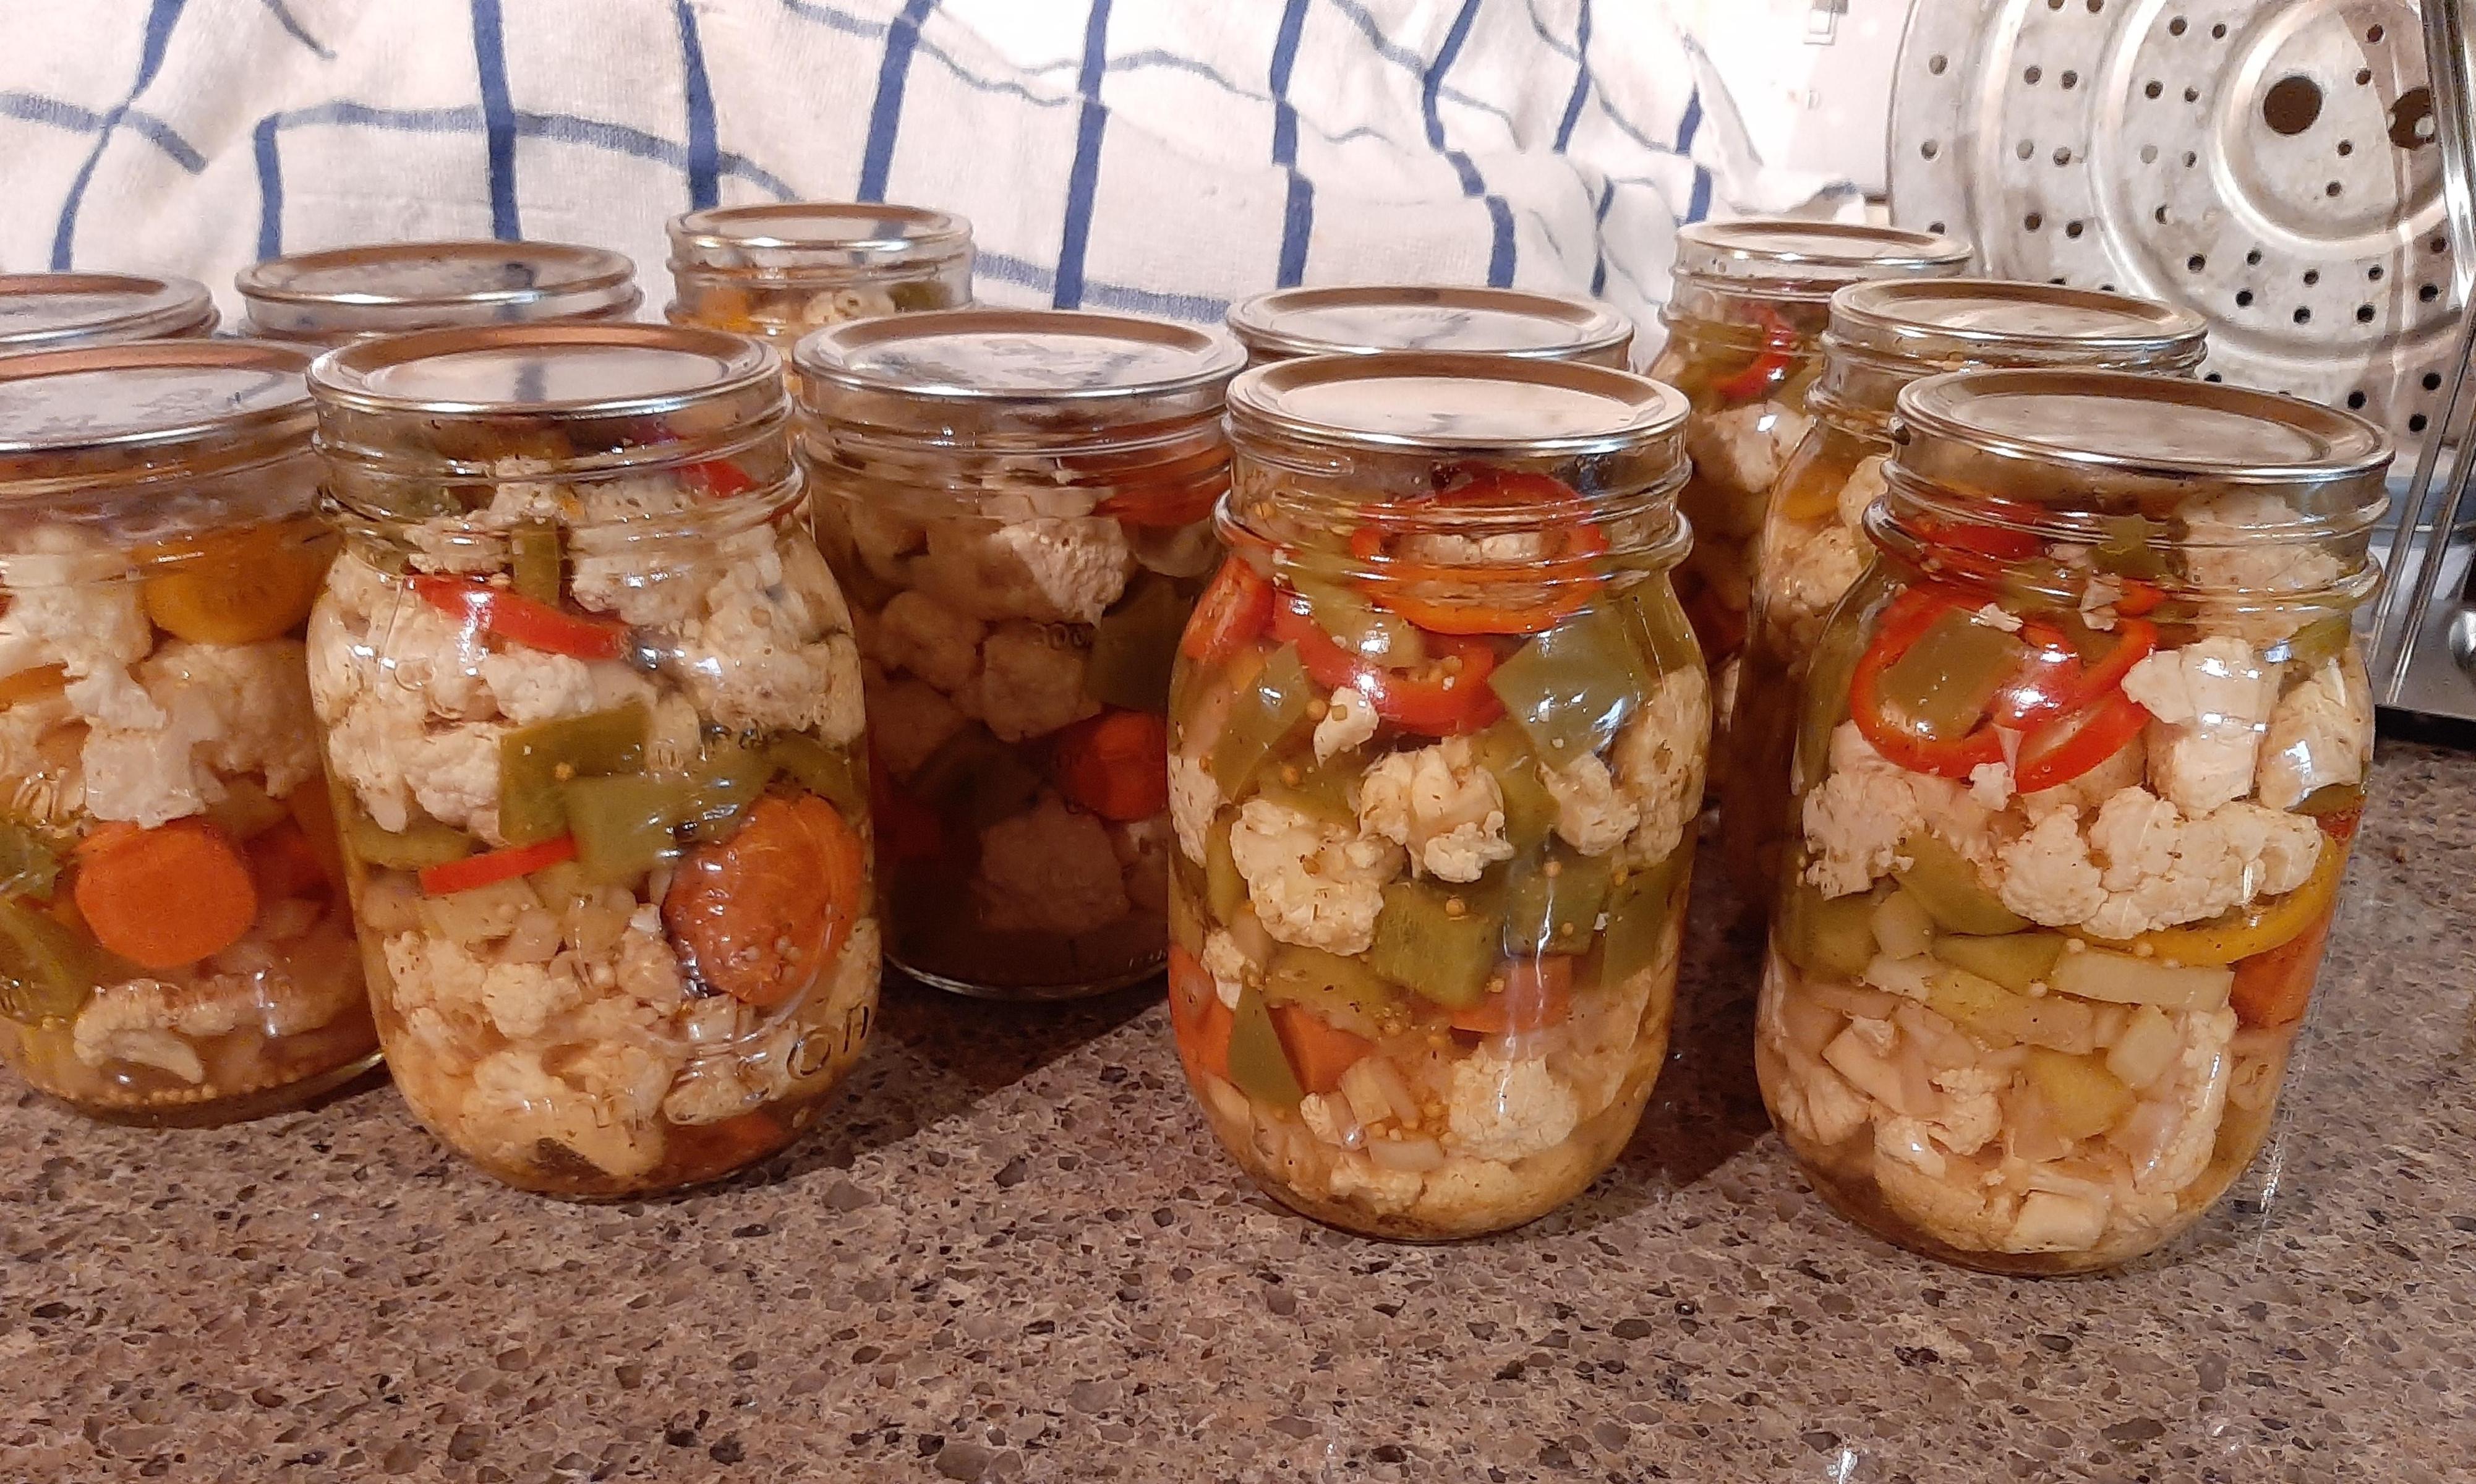 Recipe of the Week: Giardiniera (Italian Pickled Vegetables)